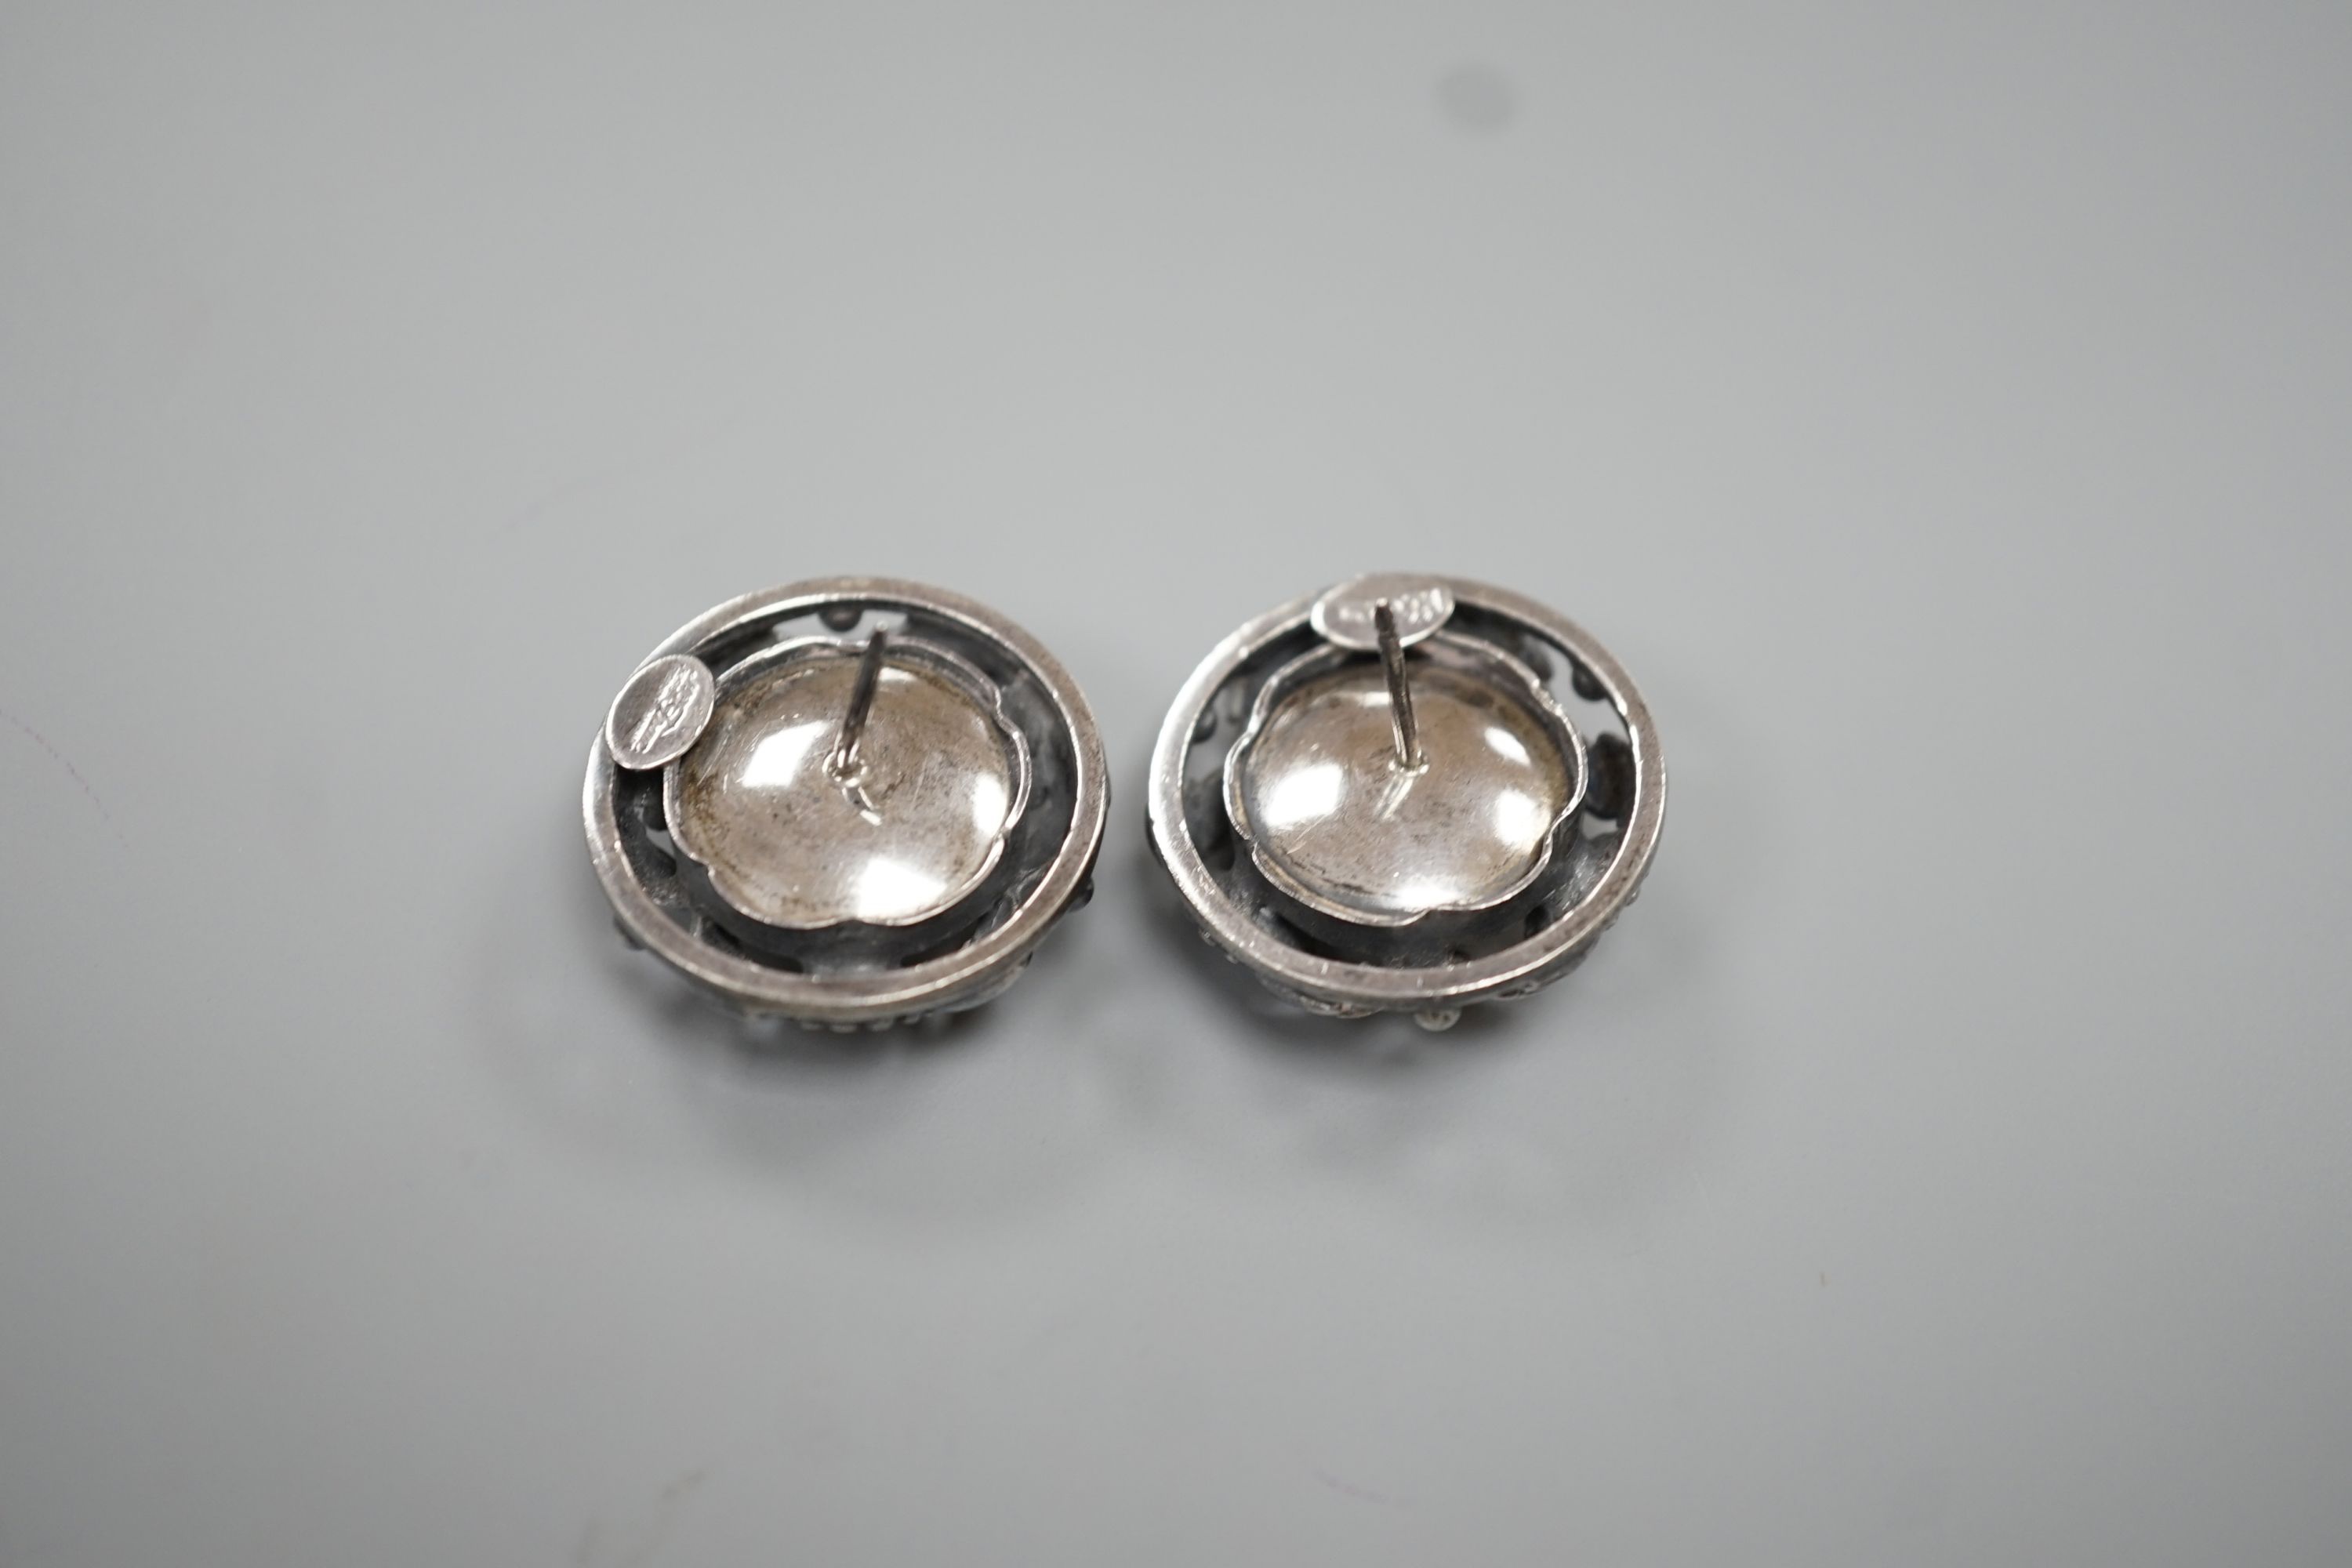 A pair Danish Niels Eric From sterling circular foliate earrings, 22mm, lacking butterflies. - Image 2 of 2